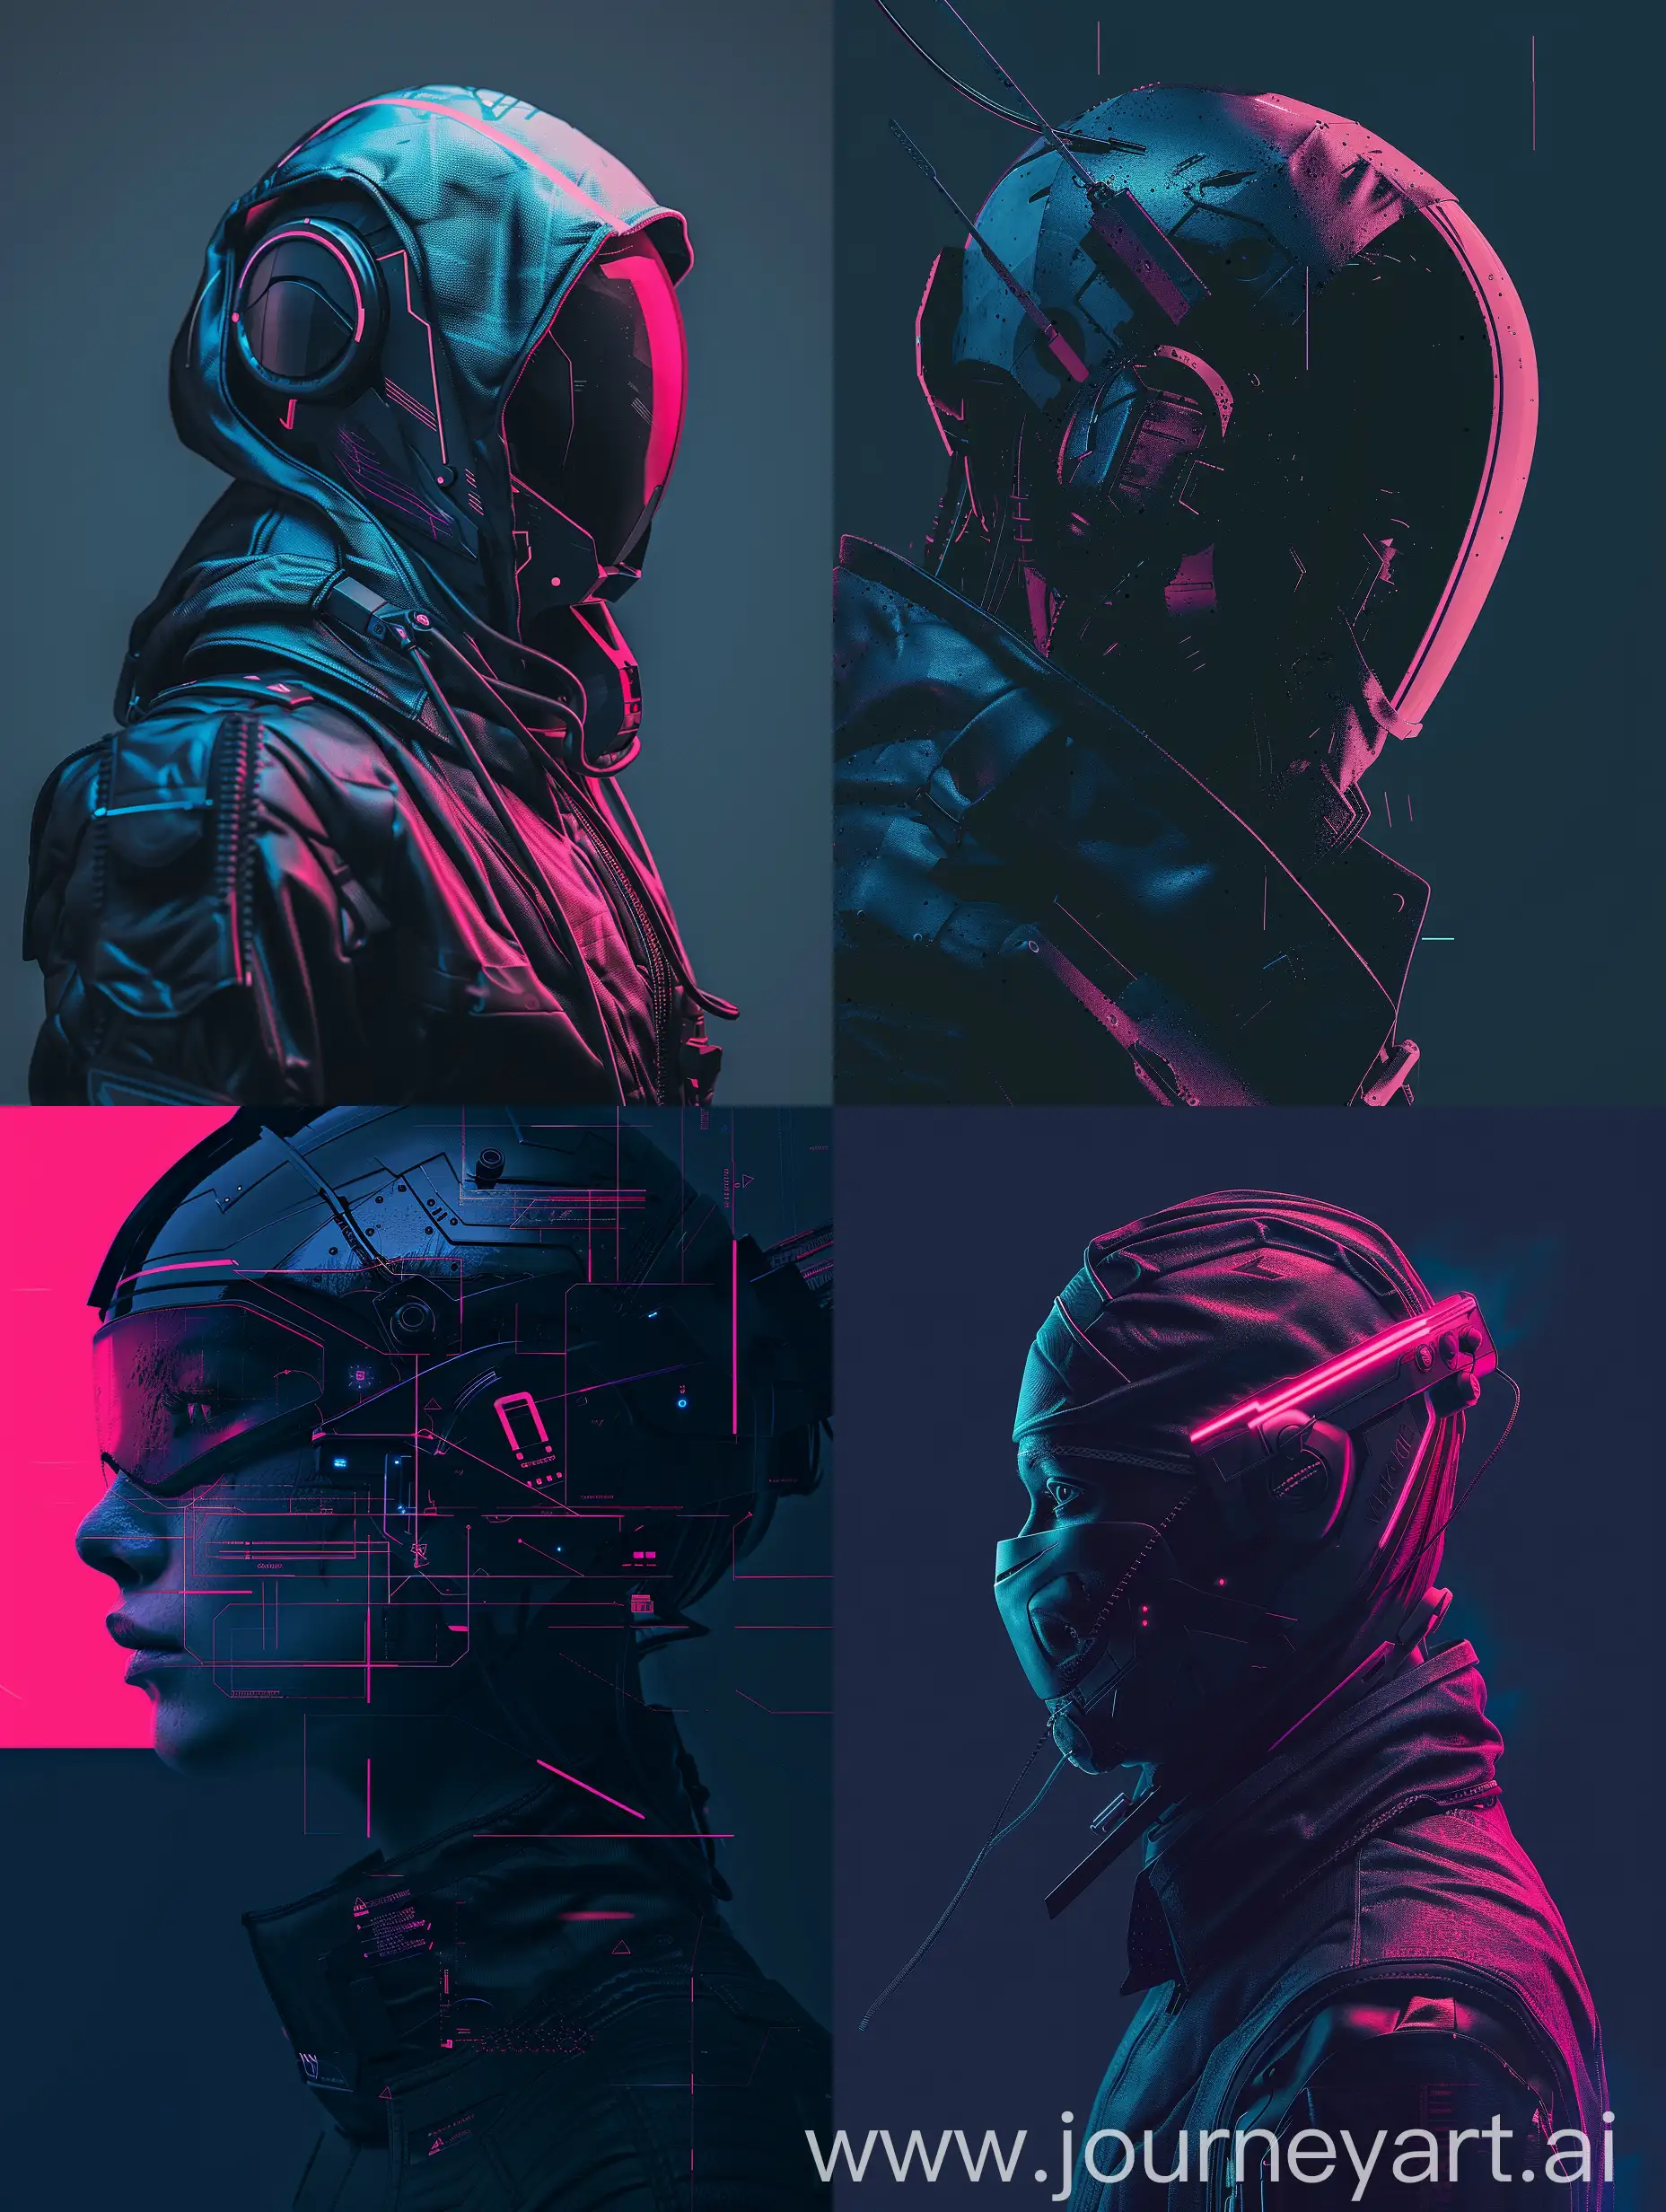 Silent Blades, assassin concept, darkness, potrait, realistic, high detailed, cyberpunk concept, with subtle pink and blue gradients, futuristic, techpunk, mech-punk, 